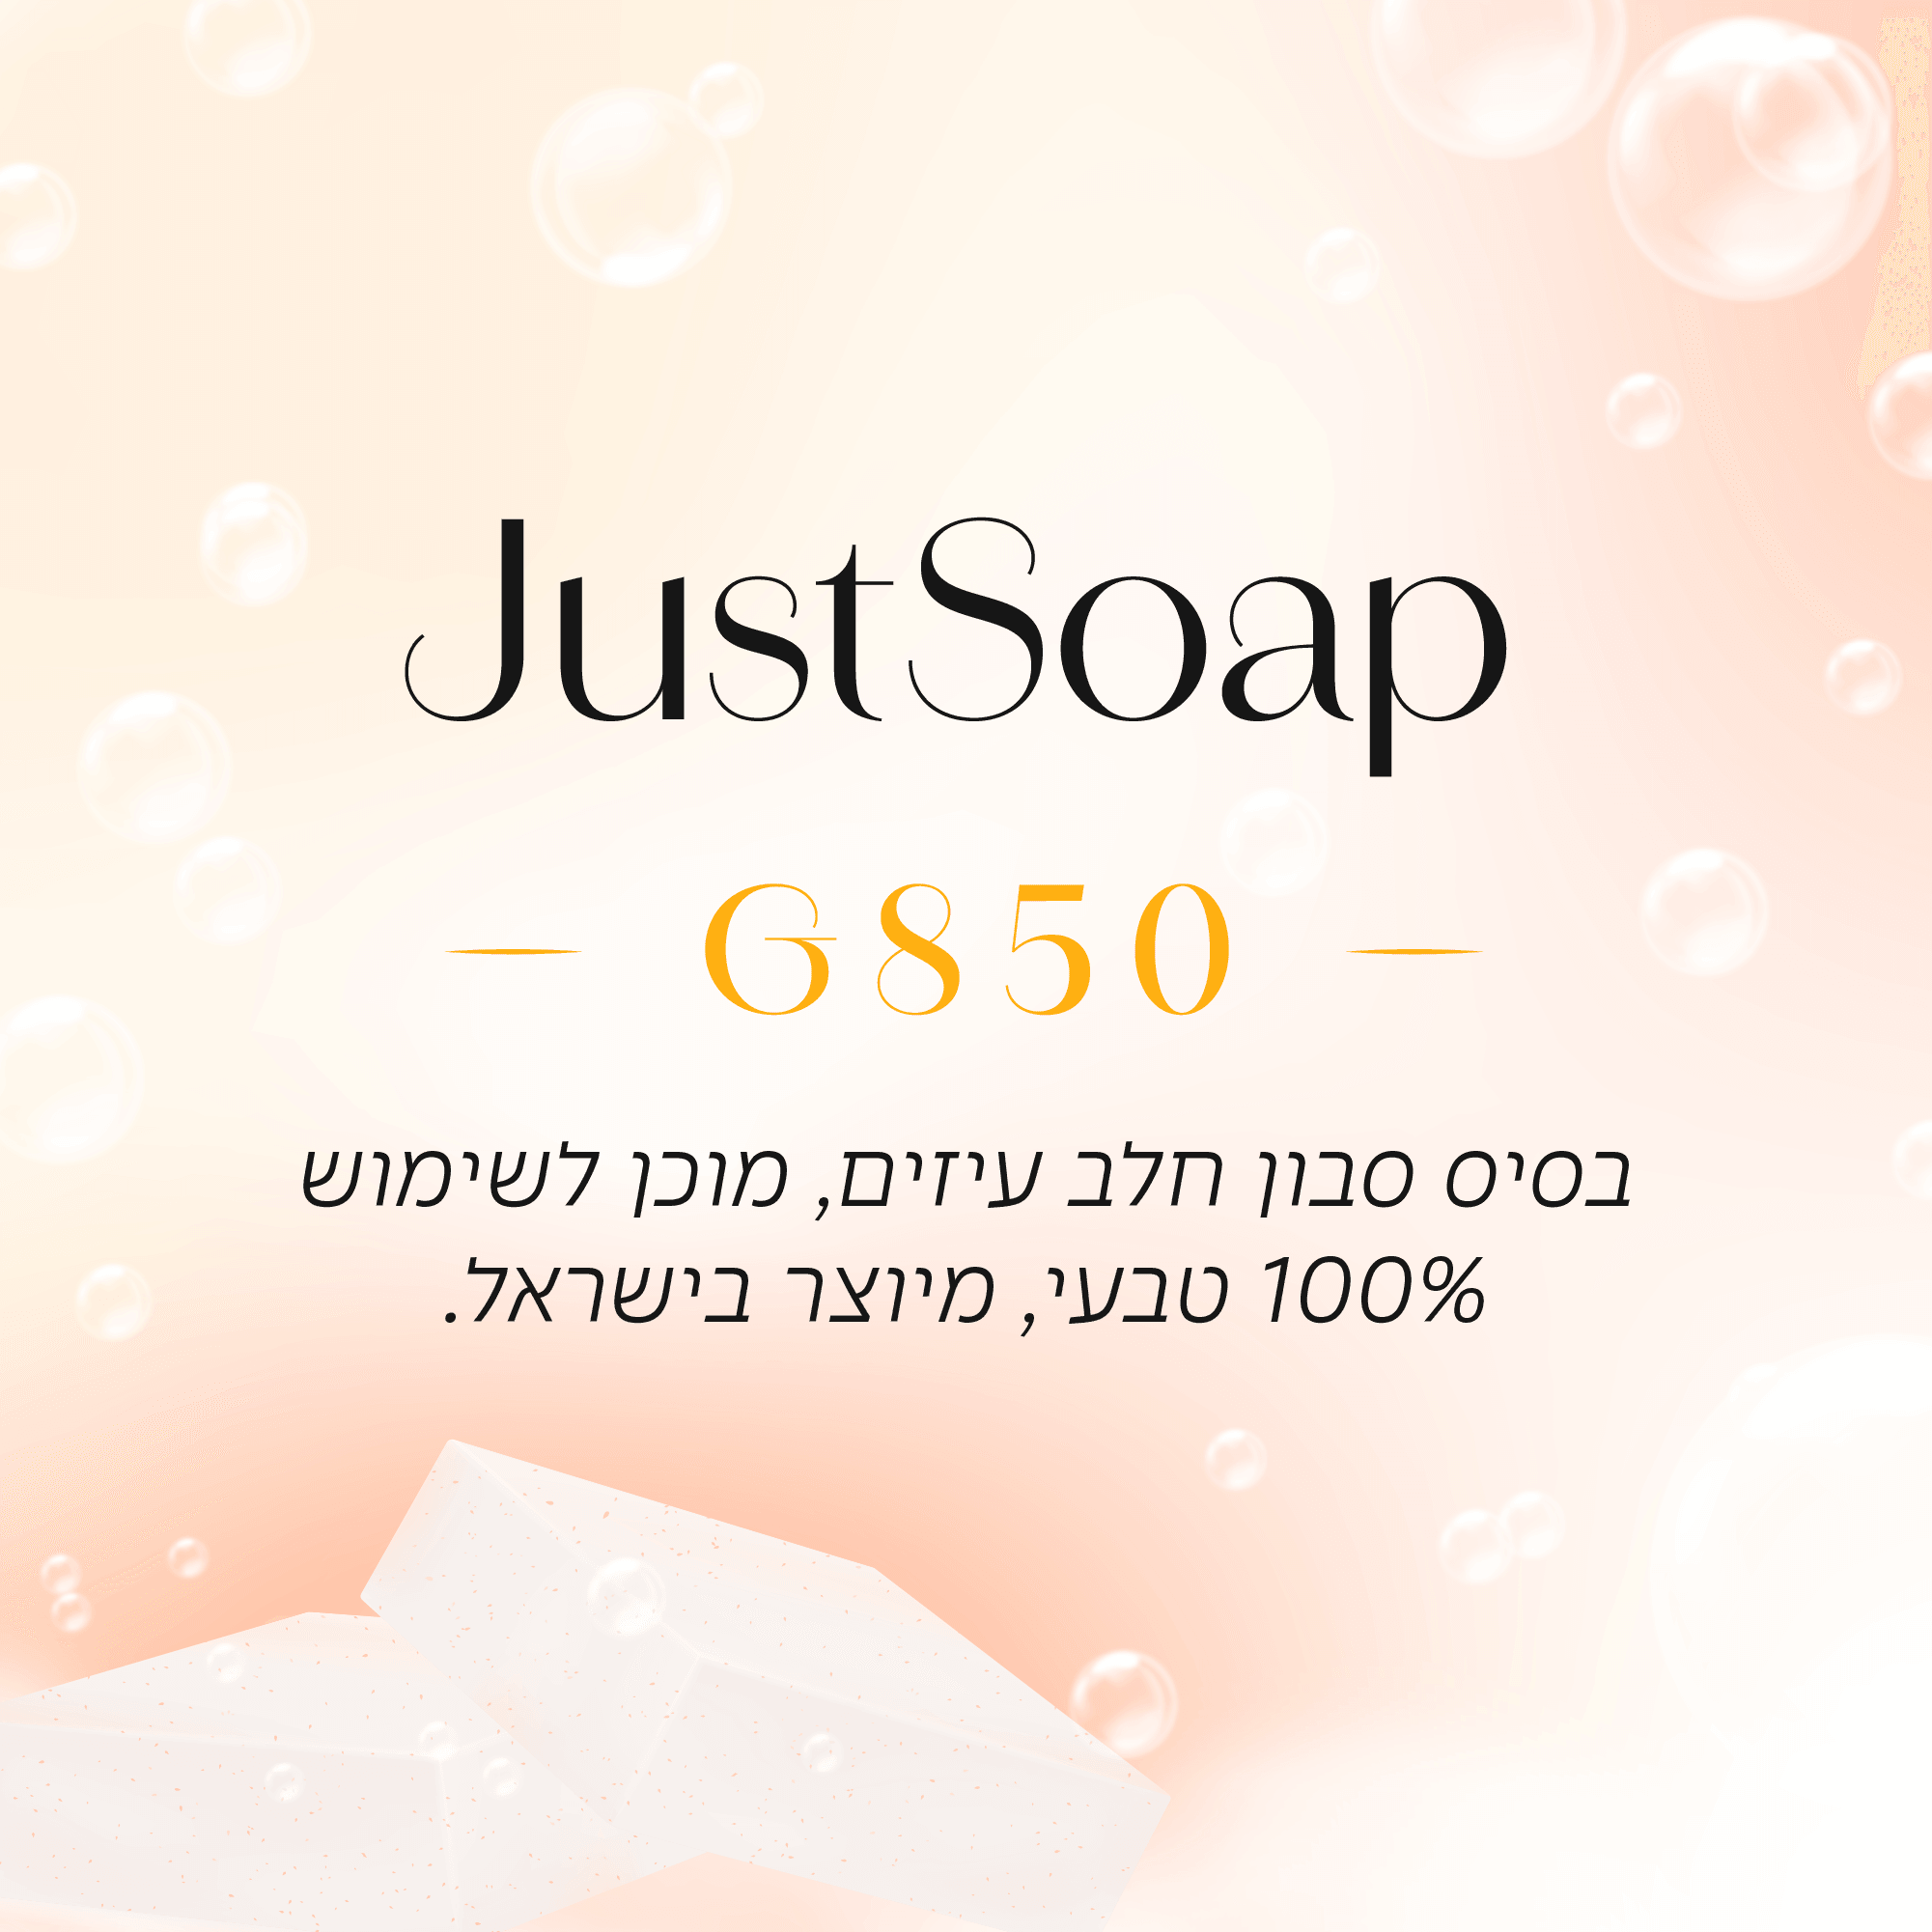 בסיס סבון חלב עיזים, G850 מוכן לשימוש בשיטת Melt & Pour - שיאננדה